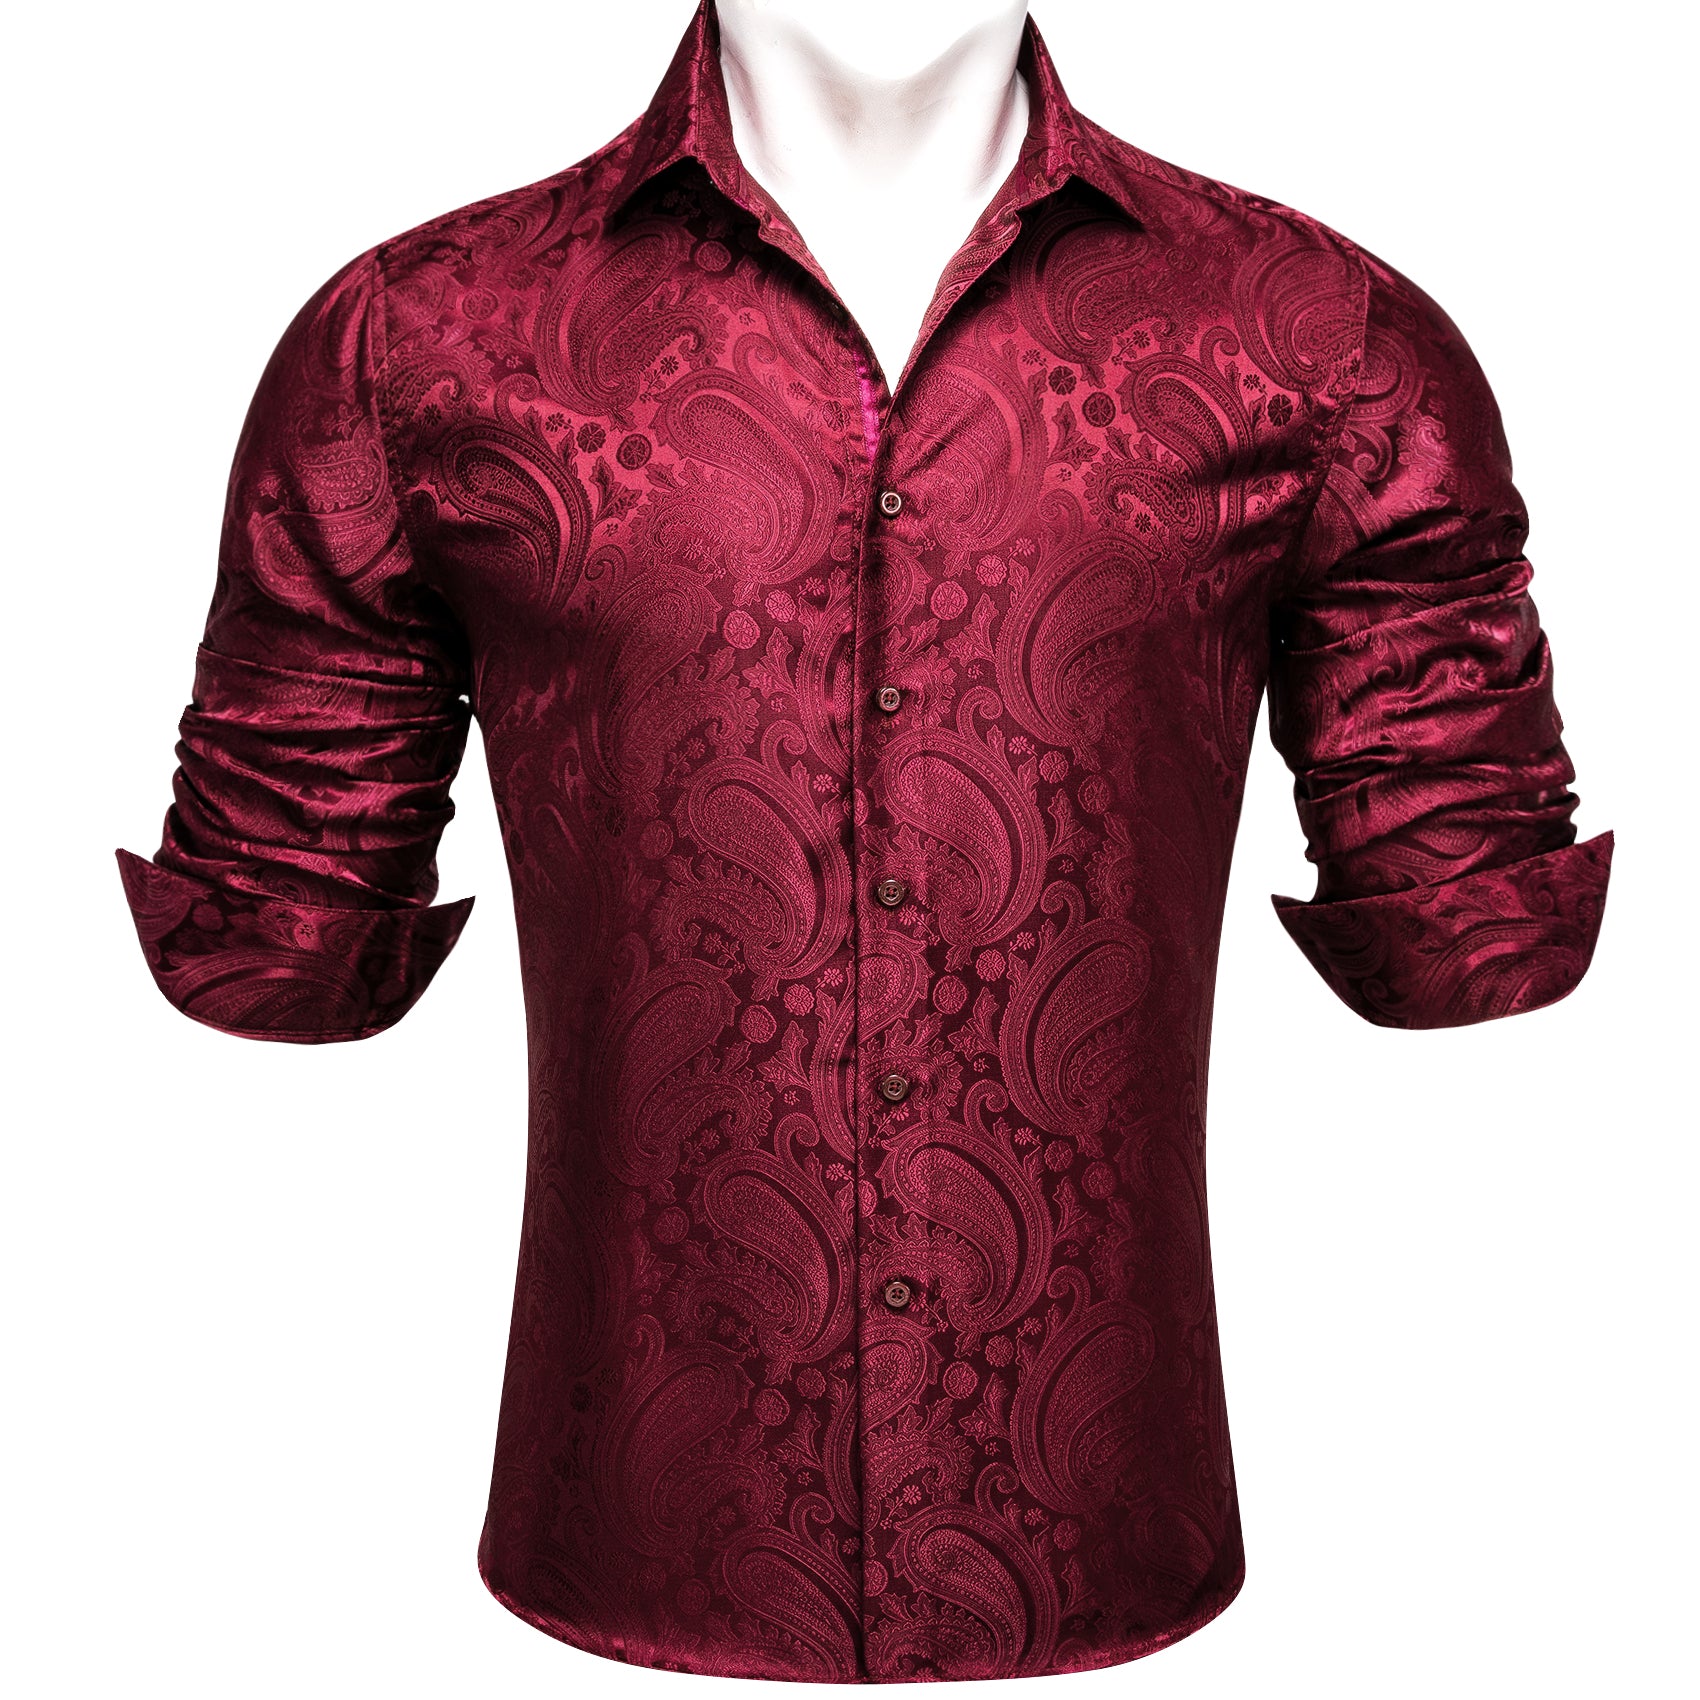 men's untucked button down dark red paisley shirt 